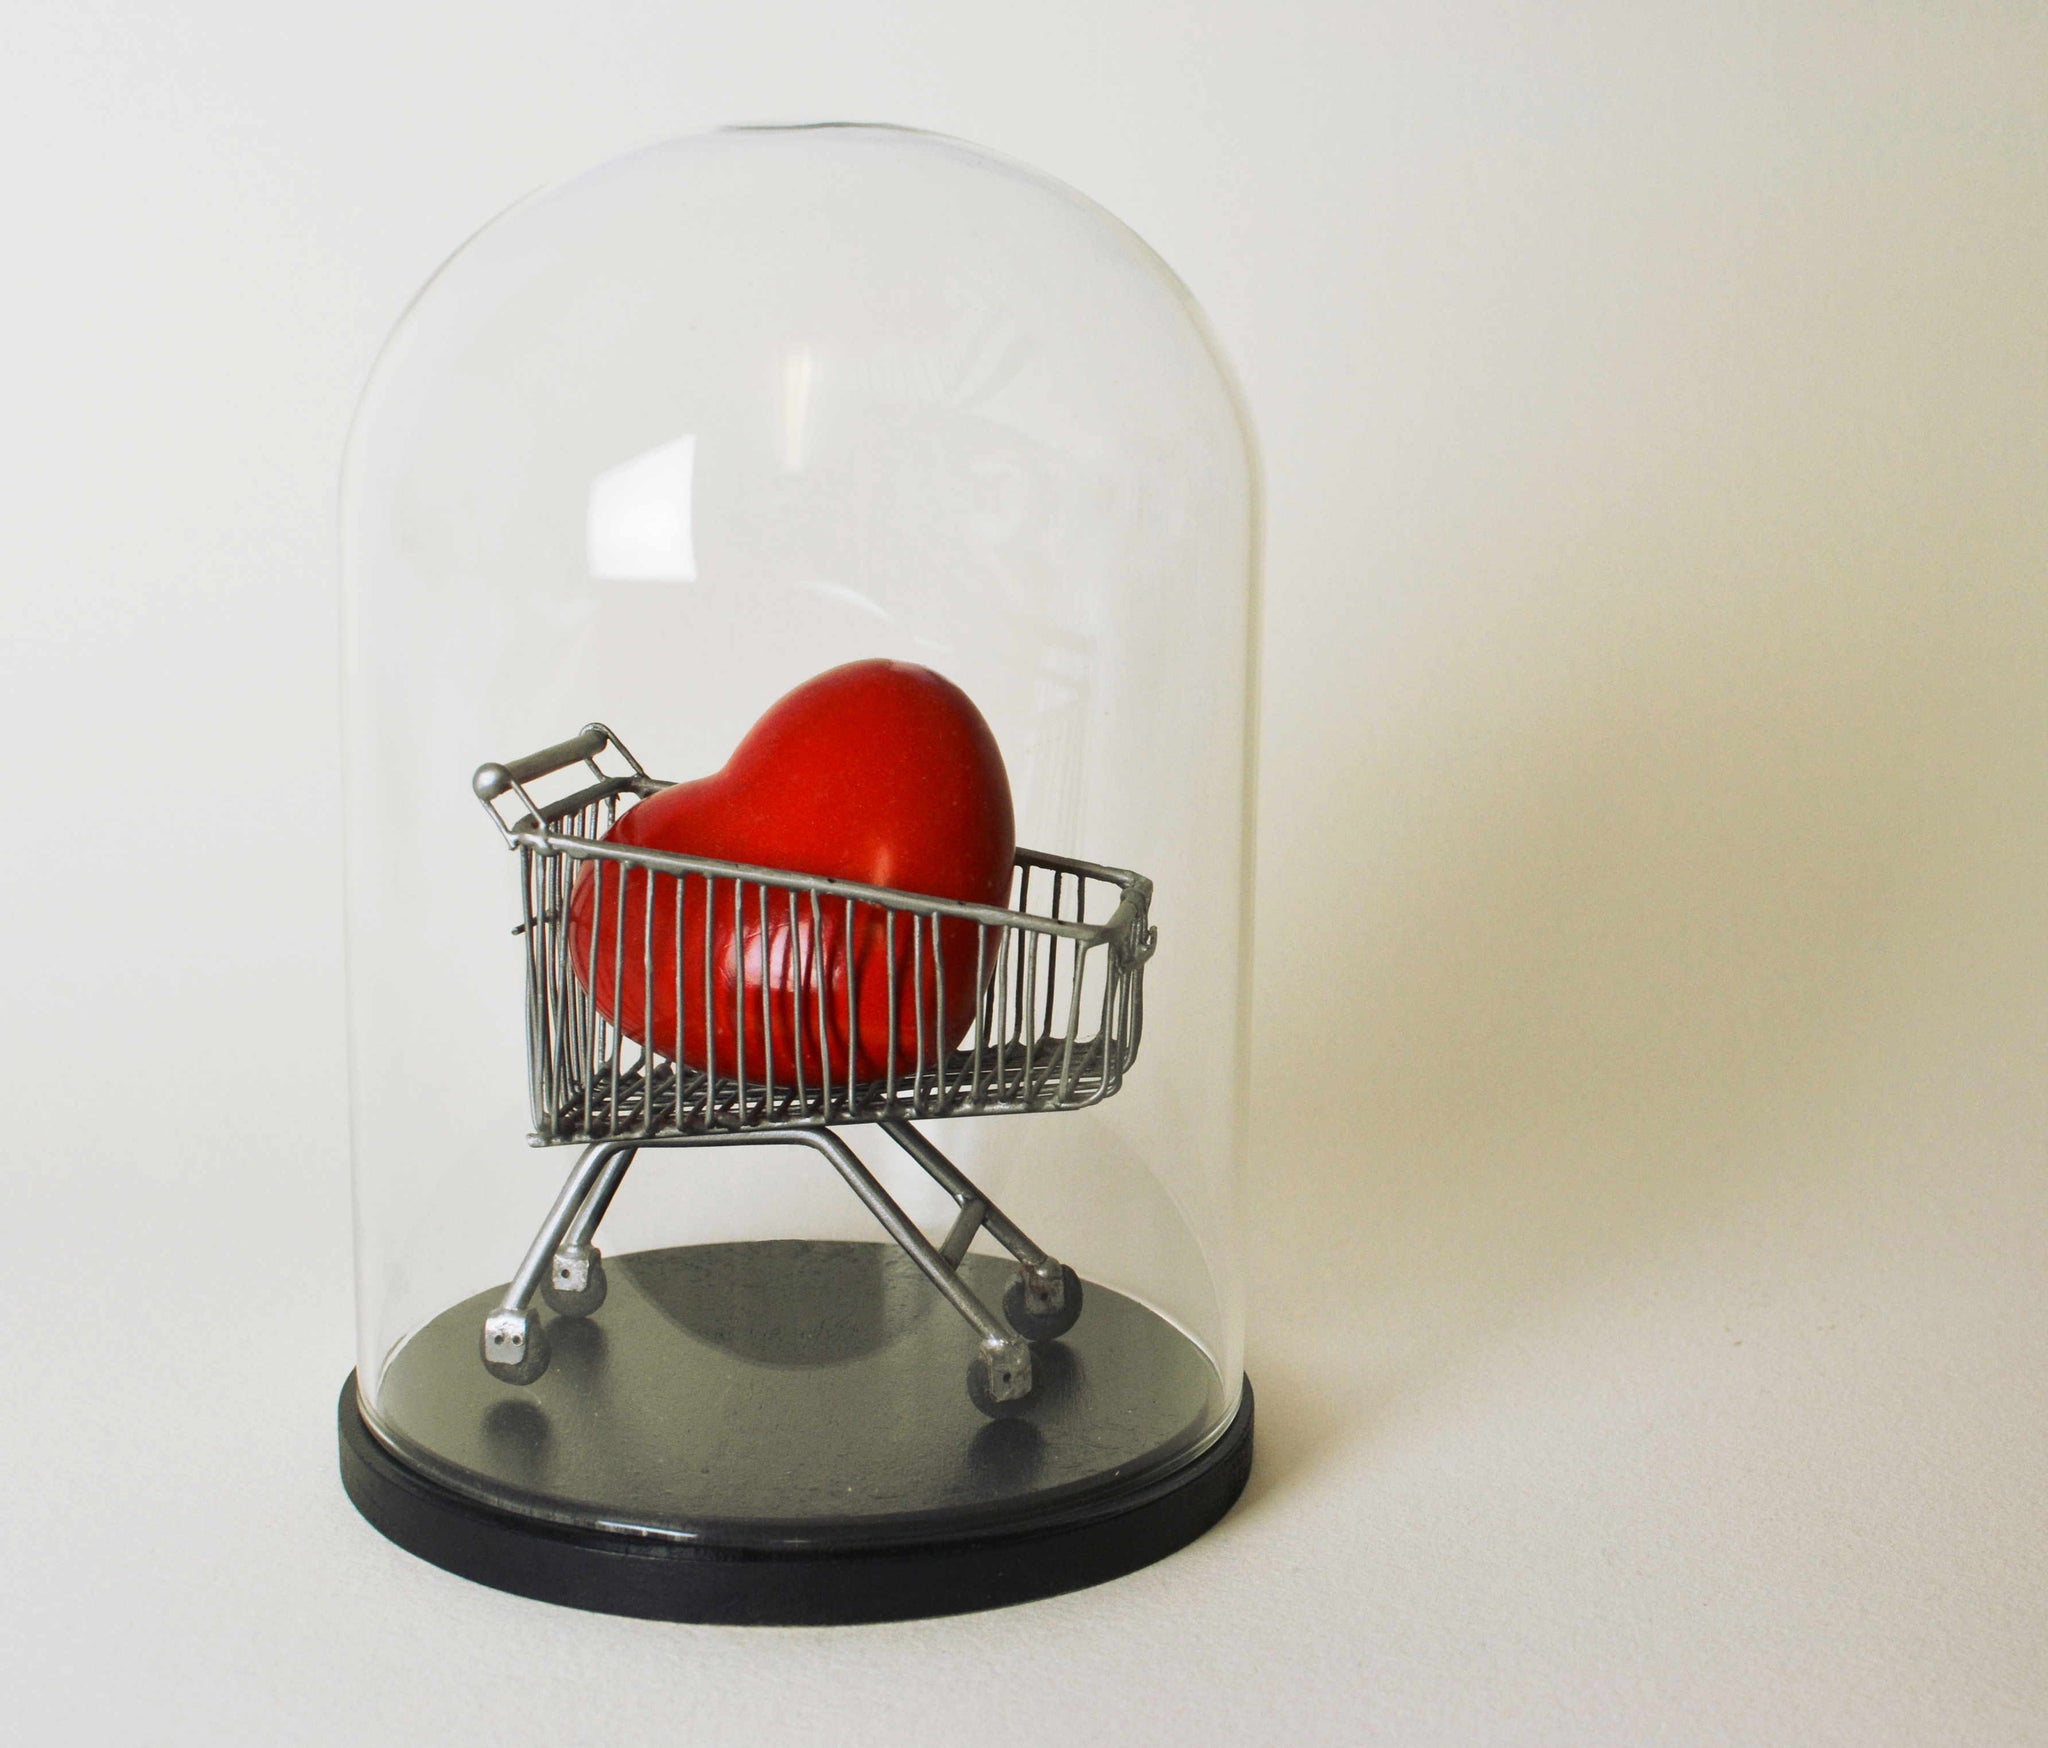 Simon Shepherd -Can't Buy Me Love - Ceramic Heart